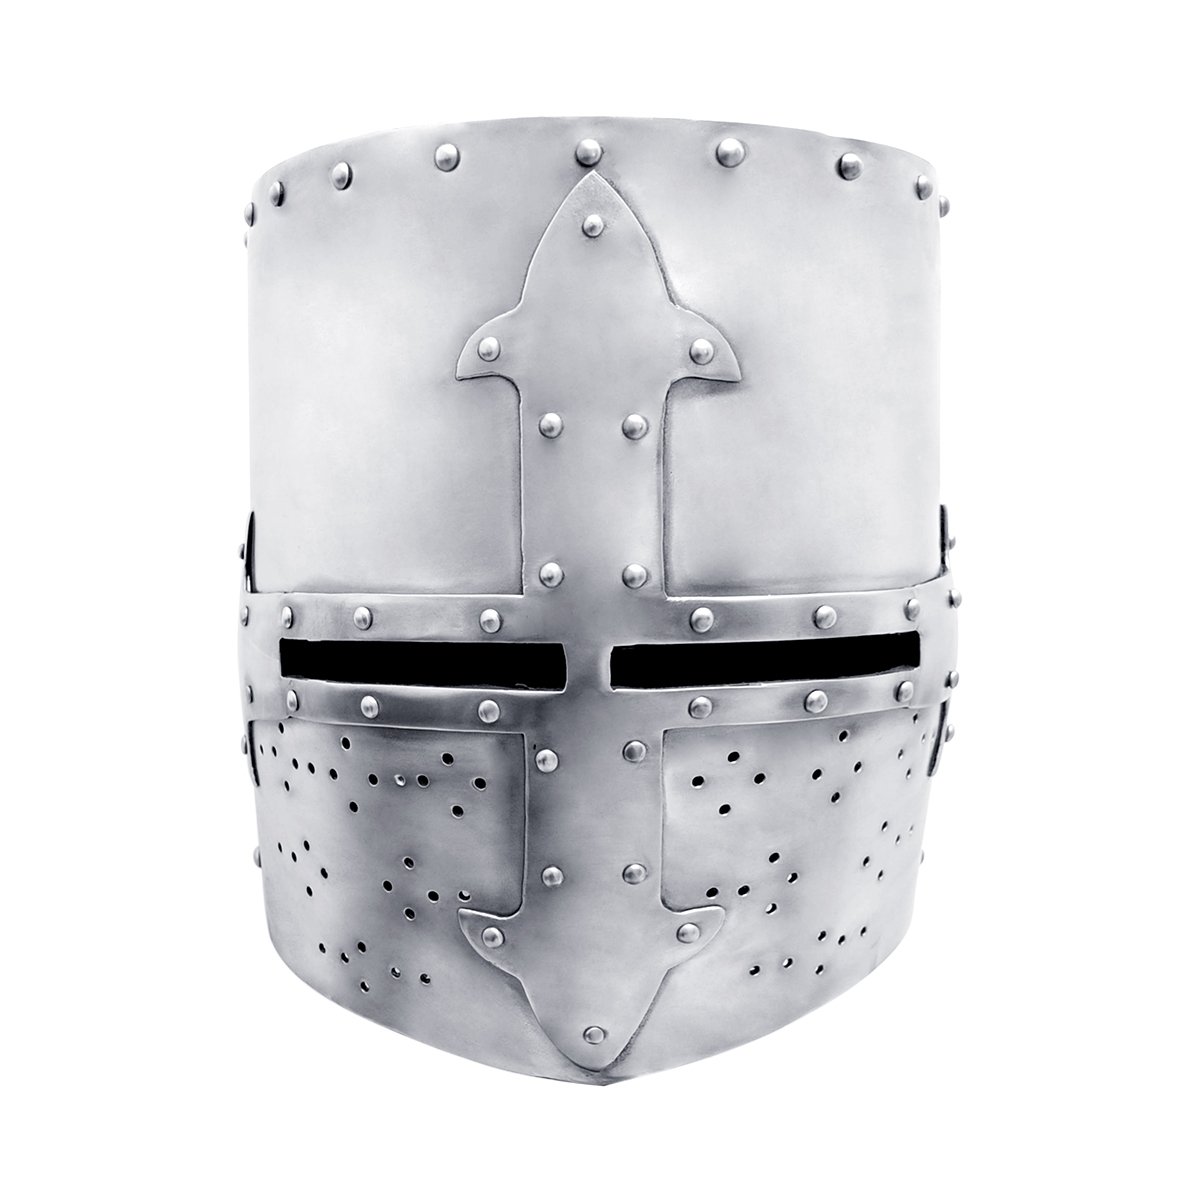 French Bucket helmet C. 1250, Size L